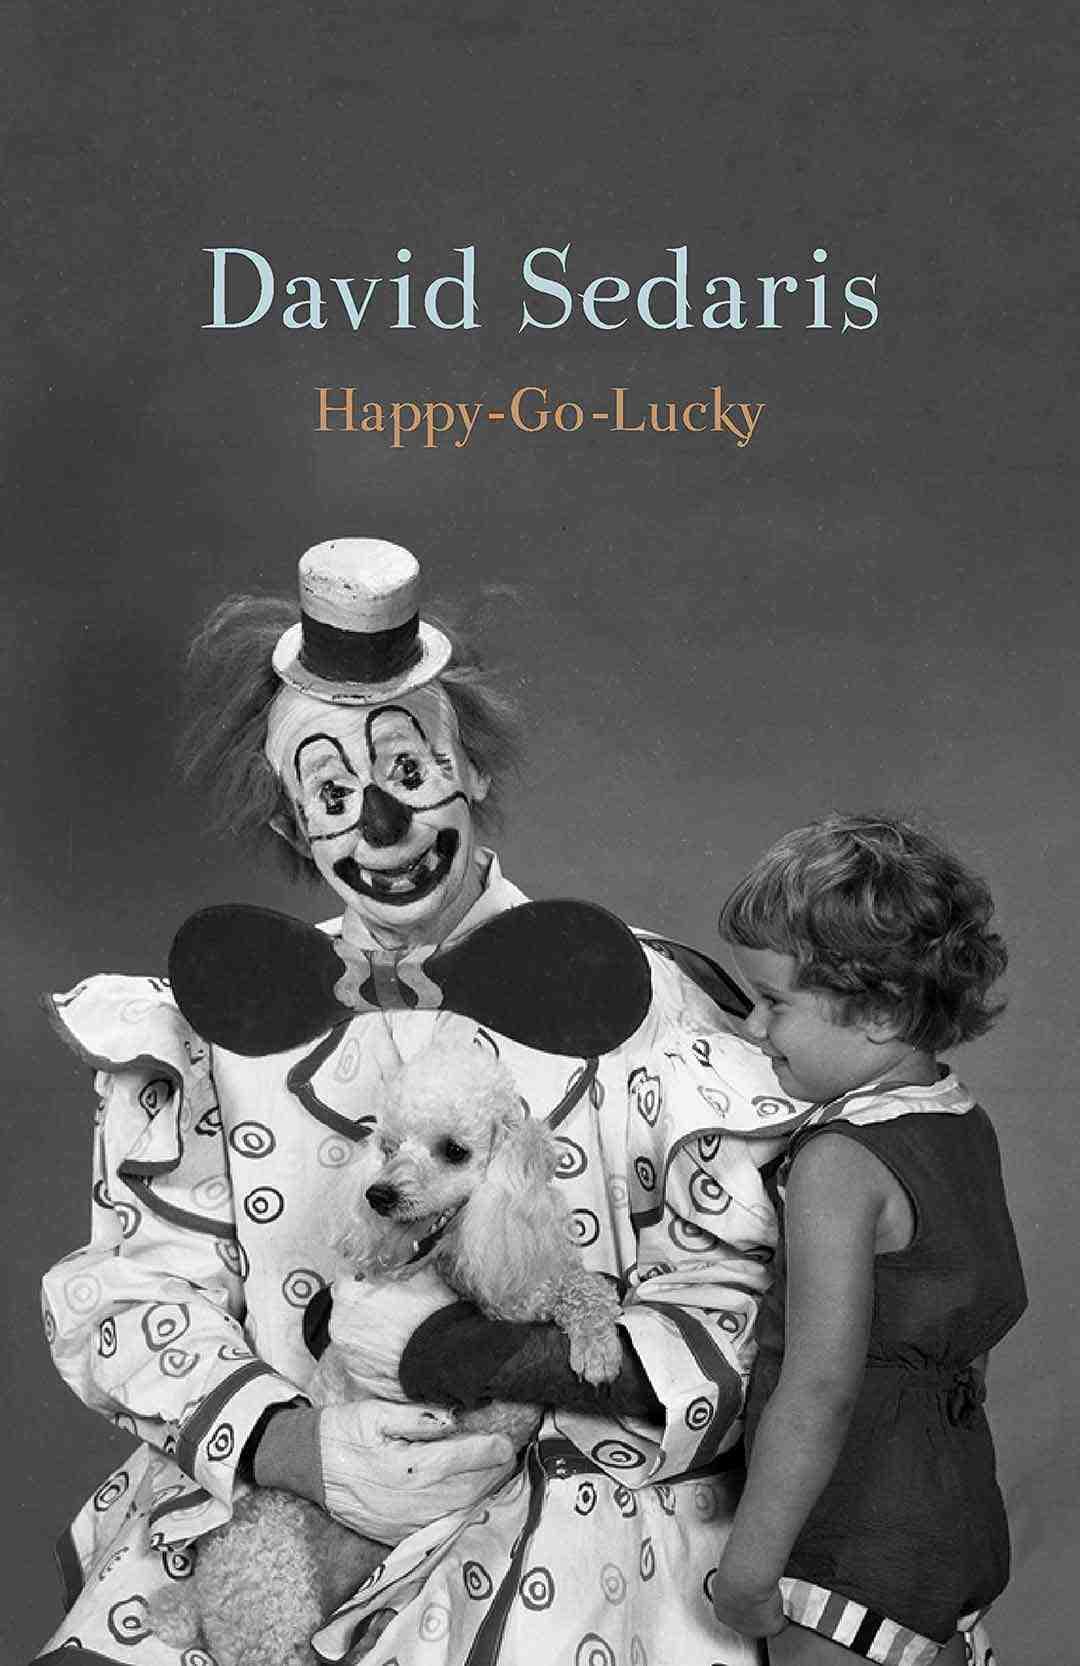 “Happy-Go-Lucky” by David Sedaris book cover